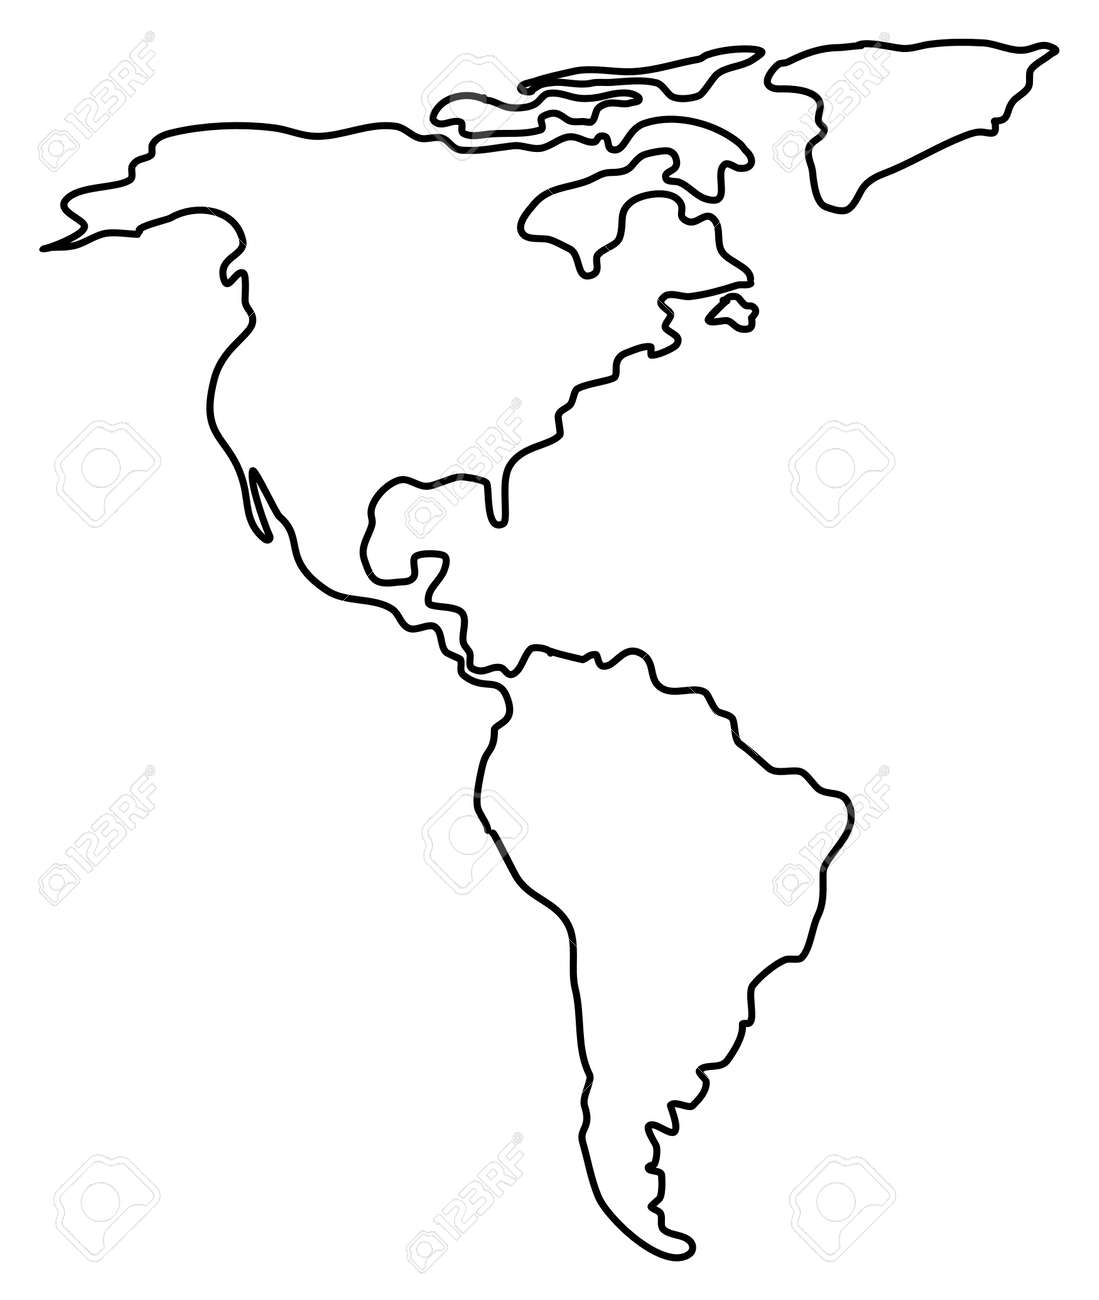 Dibujos De Mapa Continente Americano Para Colorear Vsun 9189